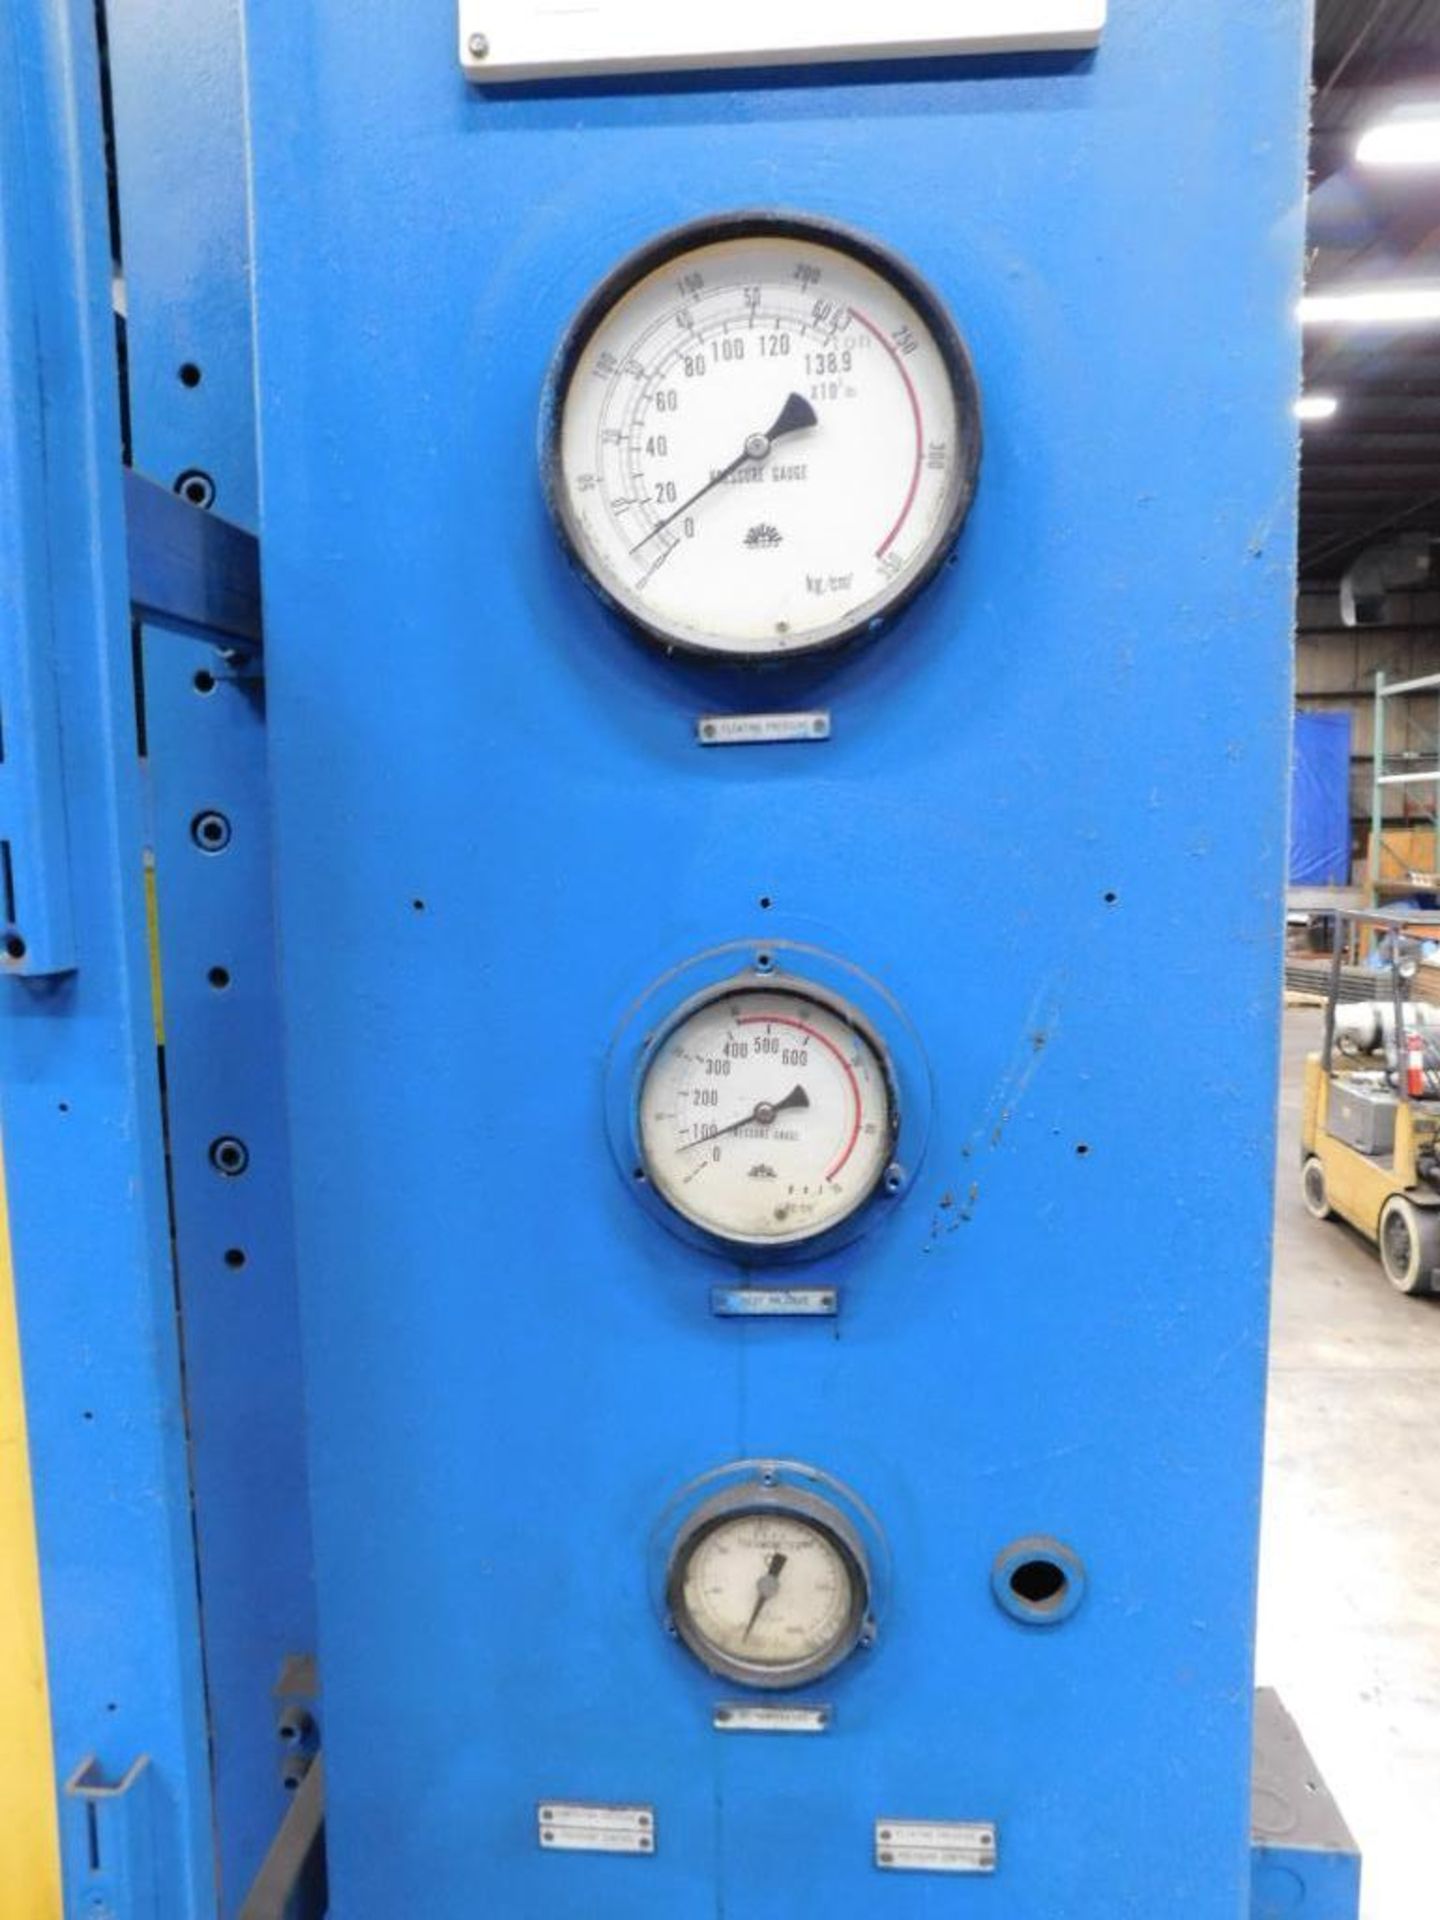 Kotaki Powder Compacting Press, Hydraulic, Model KPH-100, S/N: 2123, 100 Ton Maximum Pressing Force, - Image 18 of 27